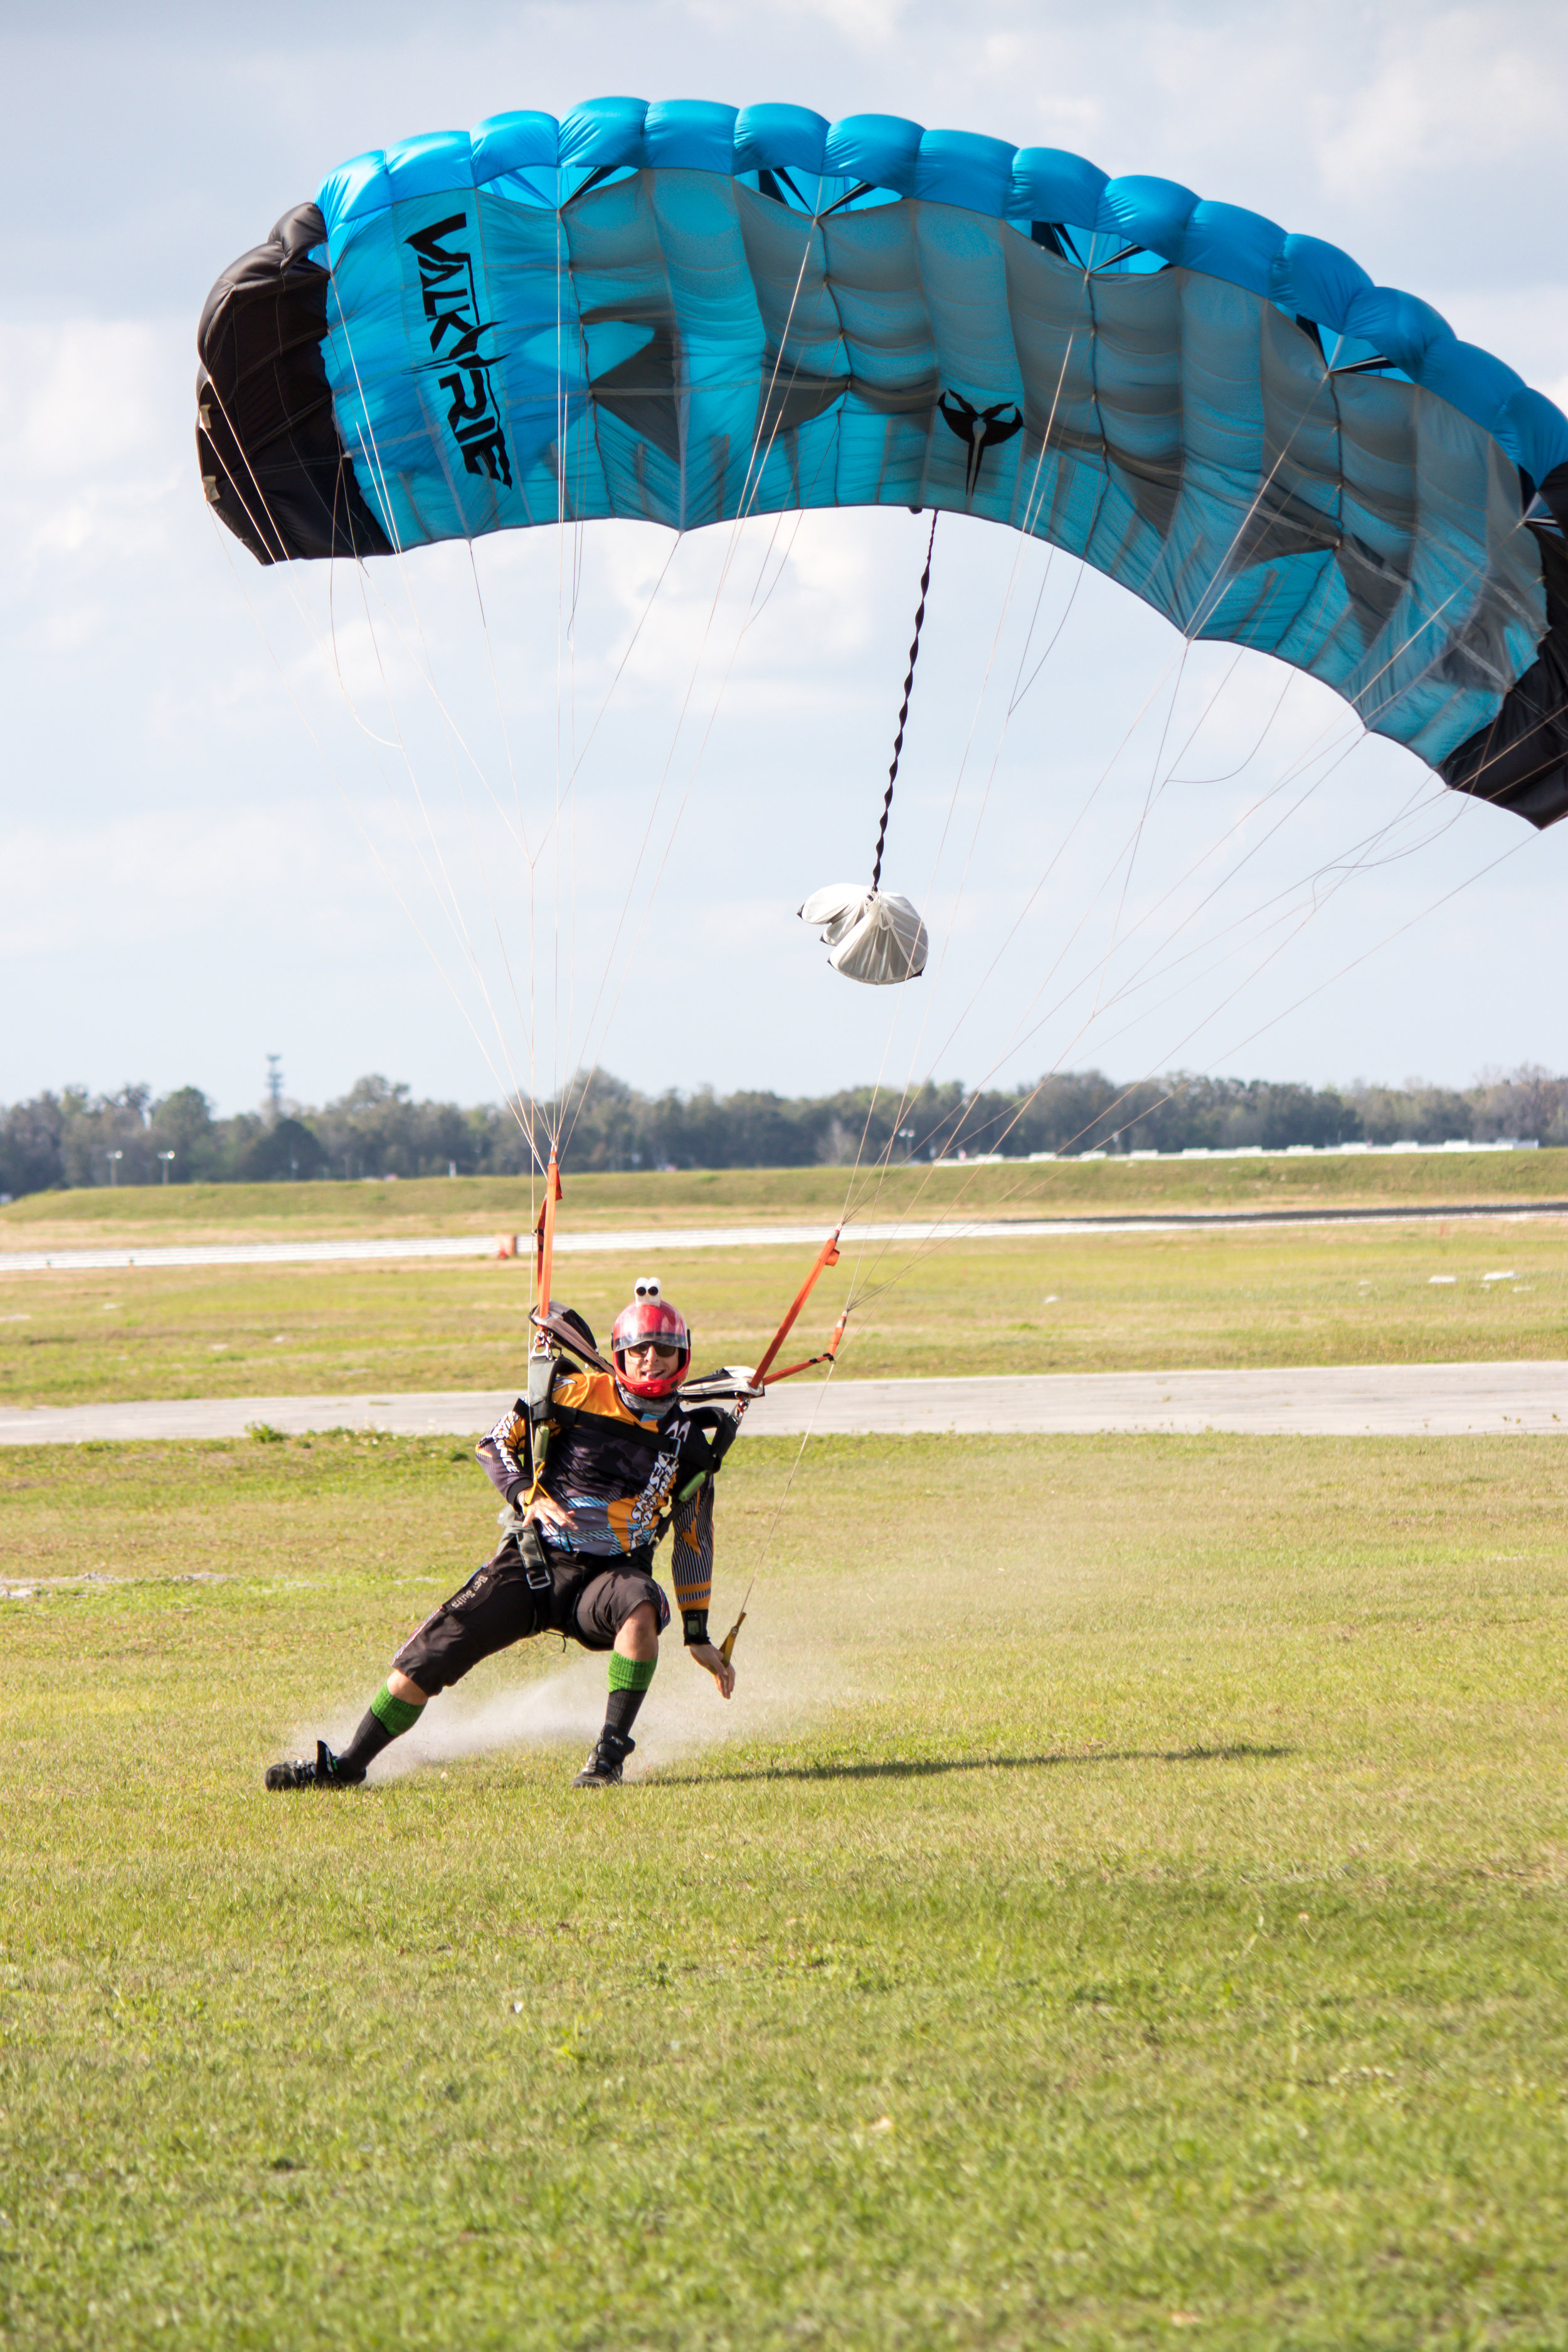 High-Kick-Photography-Florida-State-Headup-Skydiving-Record-Skydive-City-Zephryhills-ZHills-Florida-LR-3.jpg